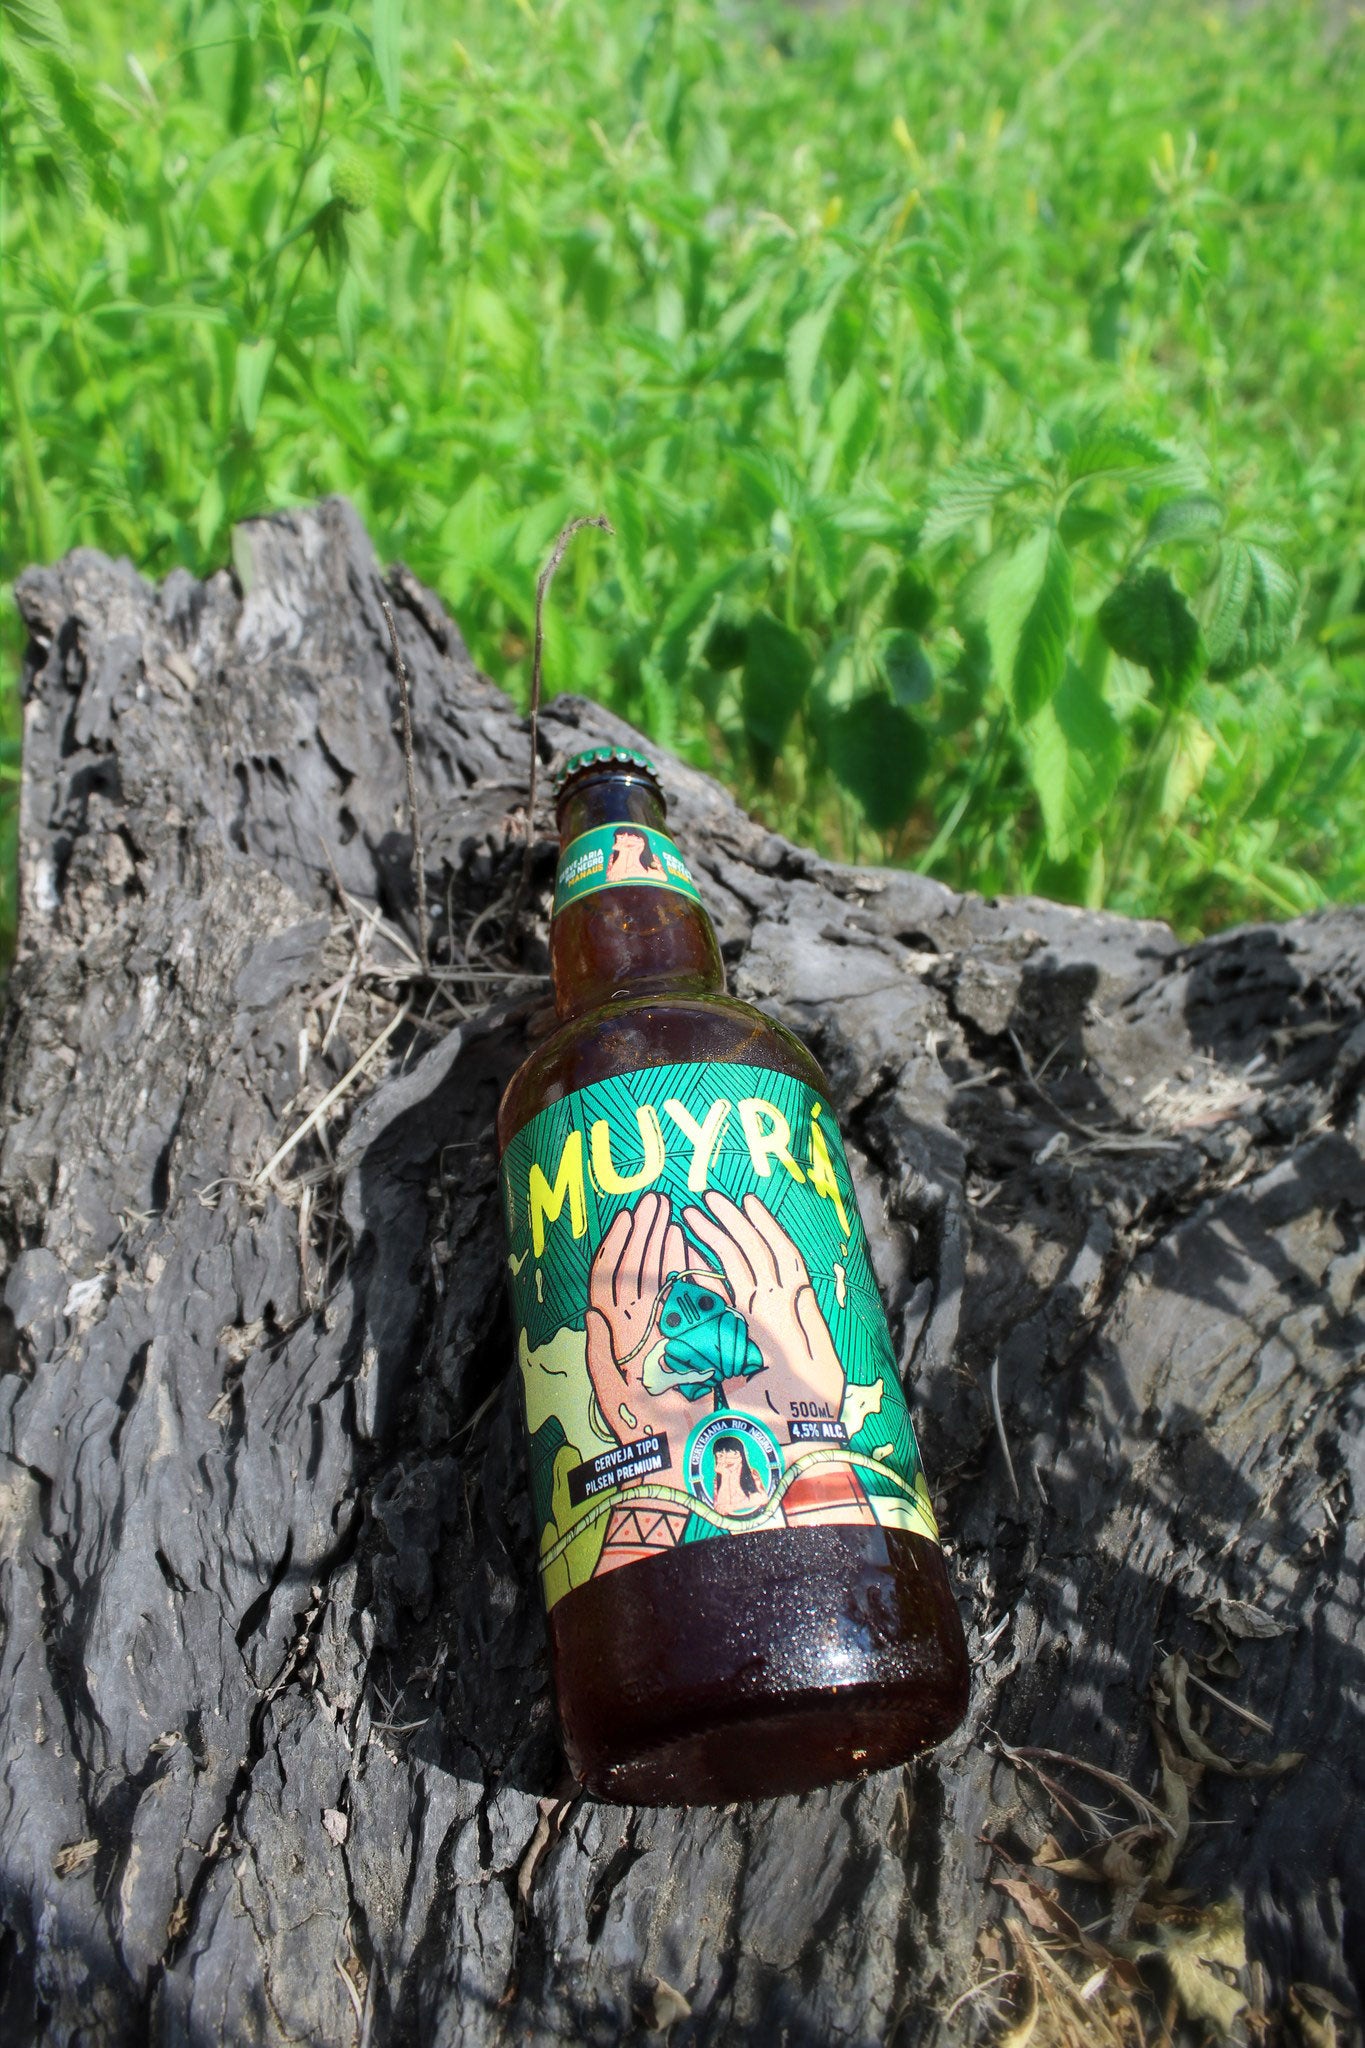 Muyrá - Cerveja Pilsen Premium - 100% Malte de Cevada